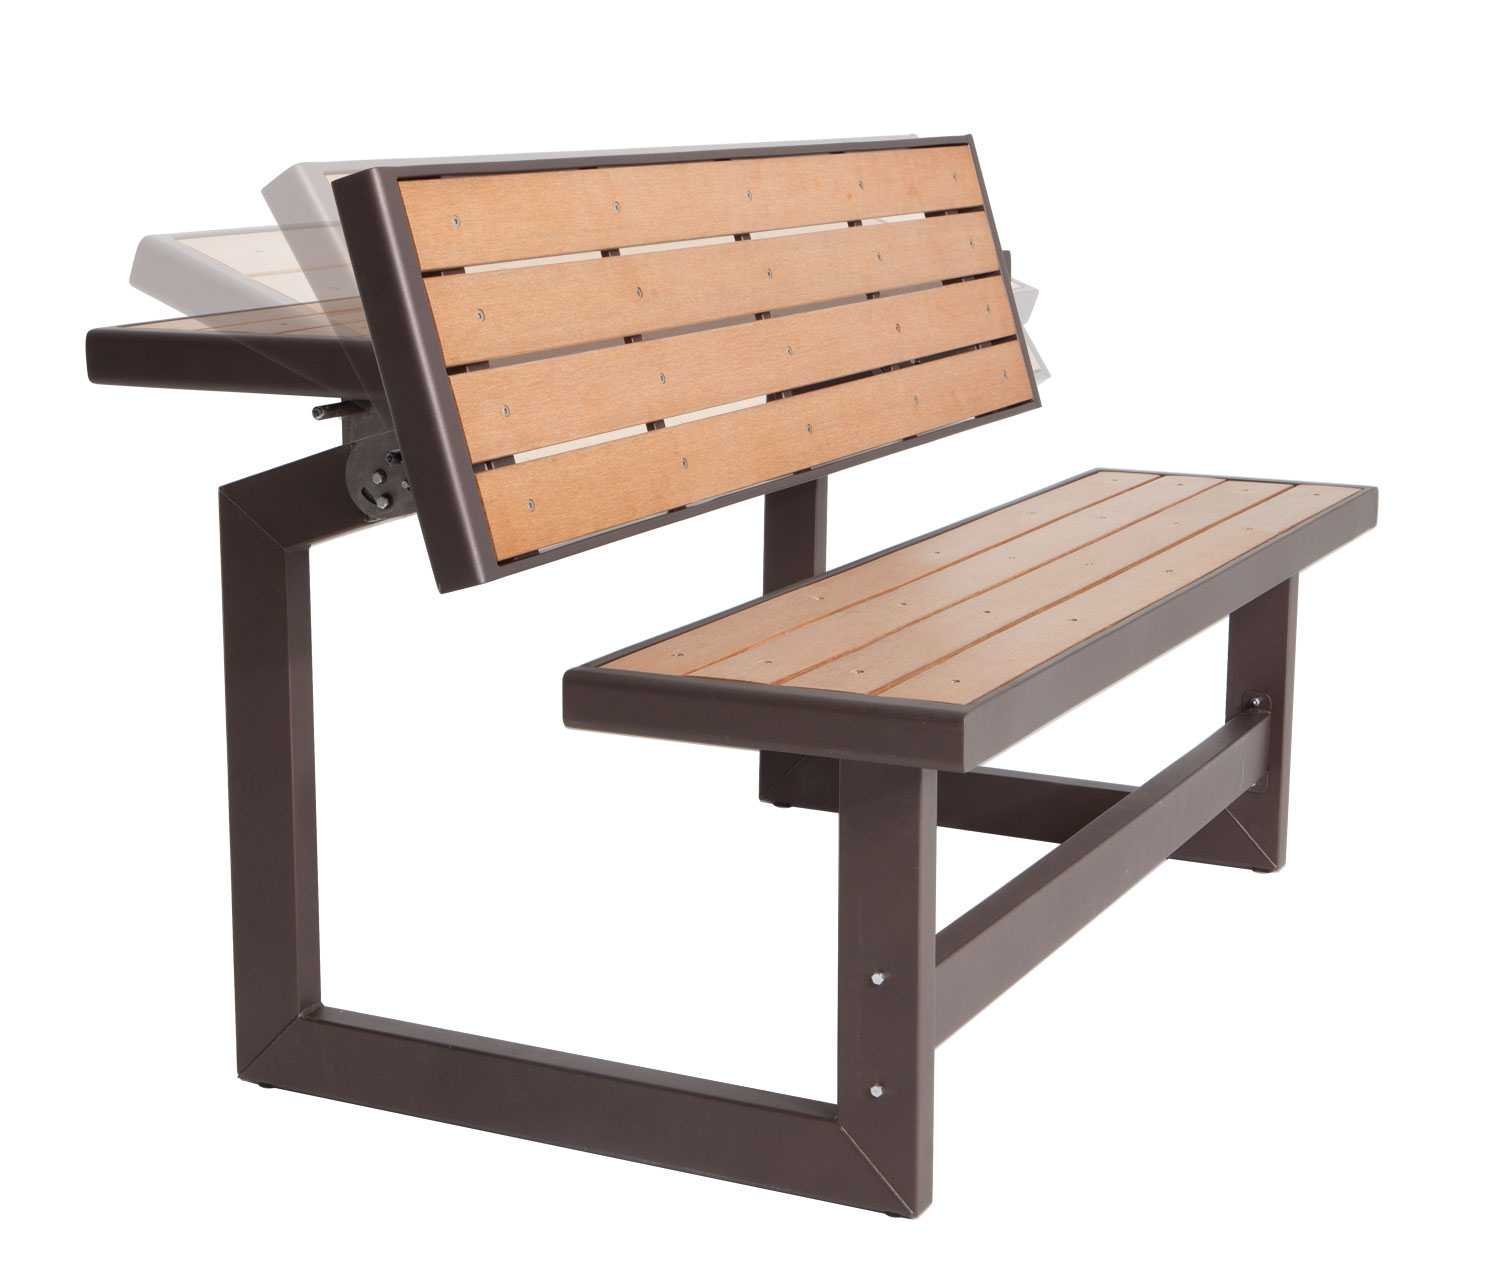 outdoor benches amazon.com : lifetime 60054 convertible bench / table, faux wood  construction : VPZMXCJ